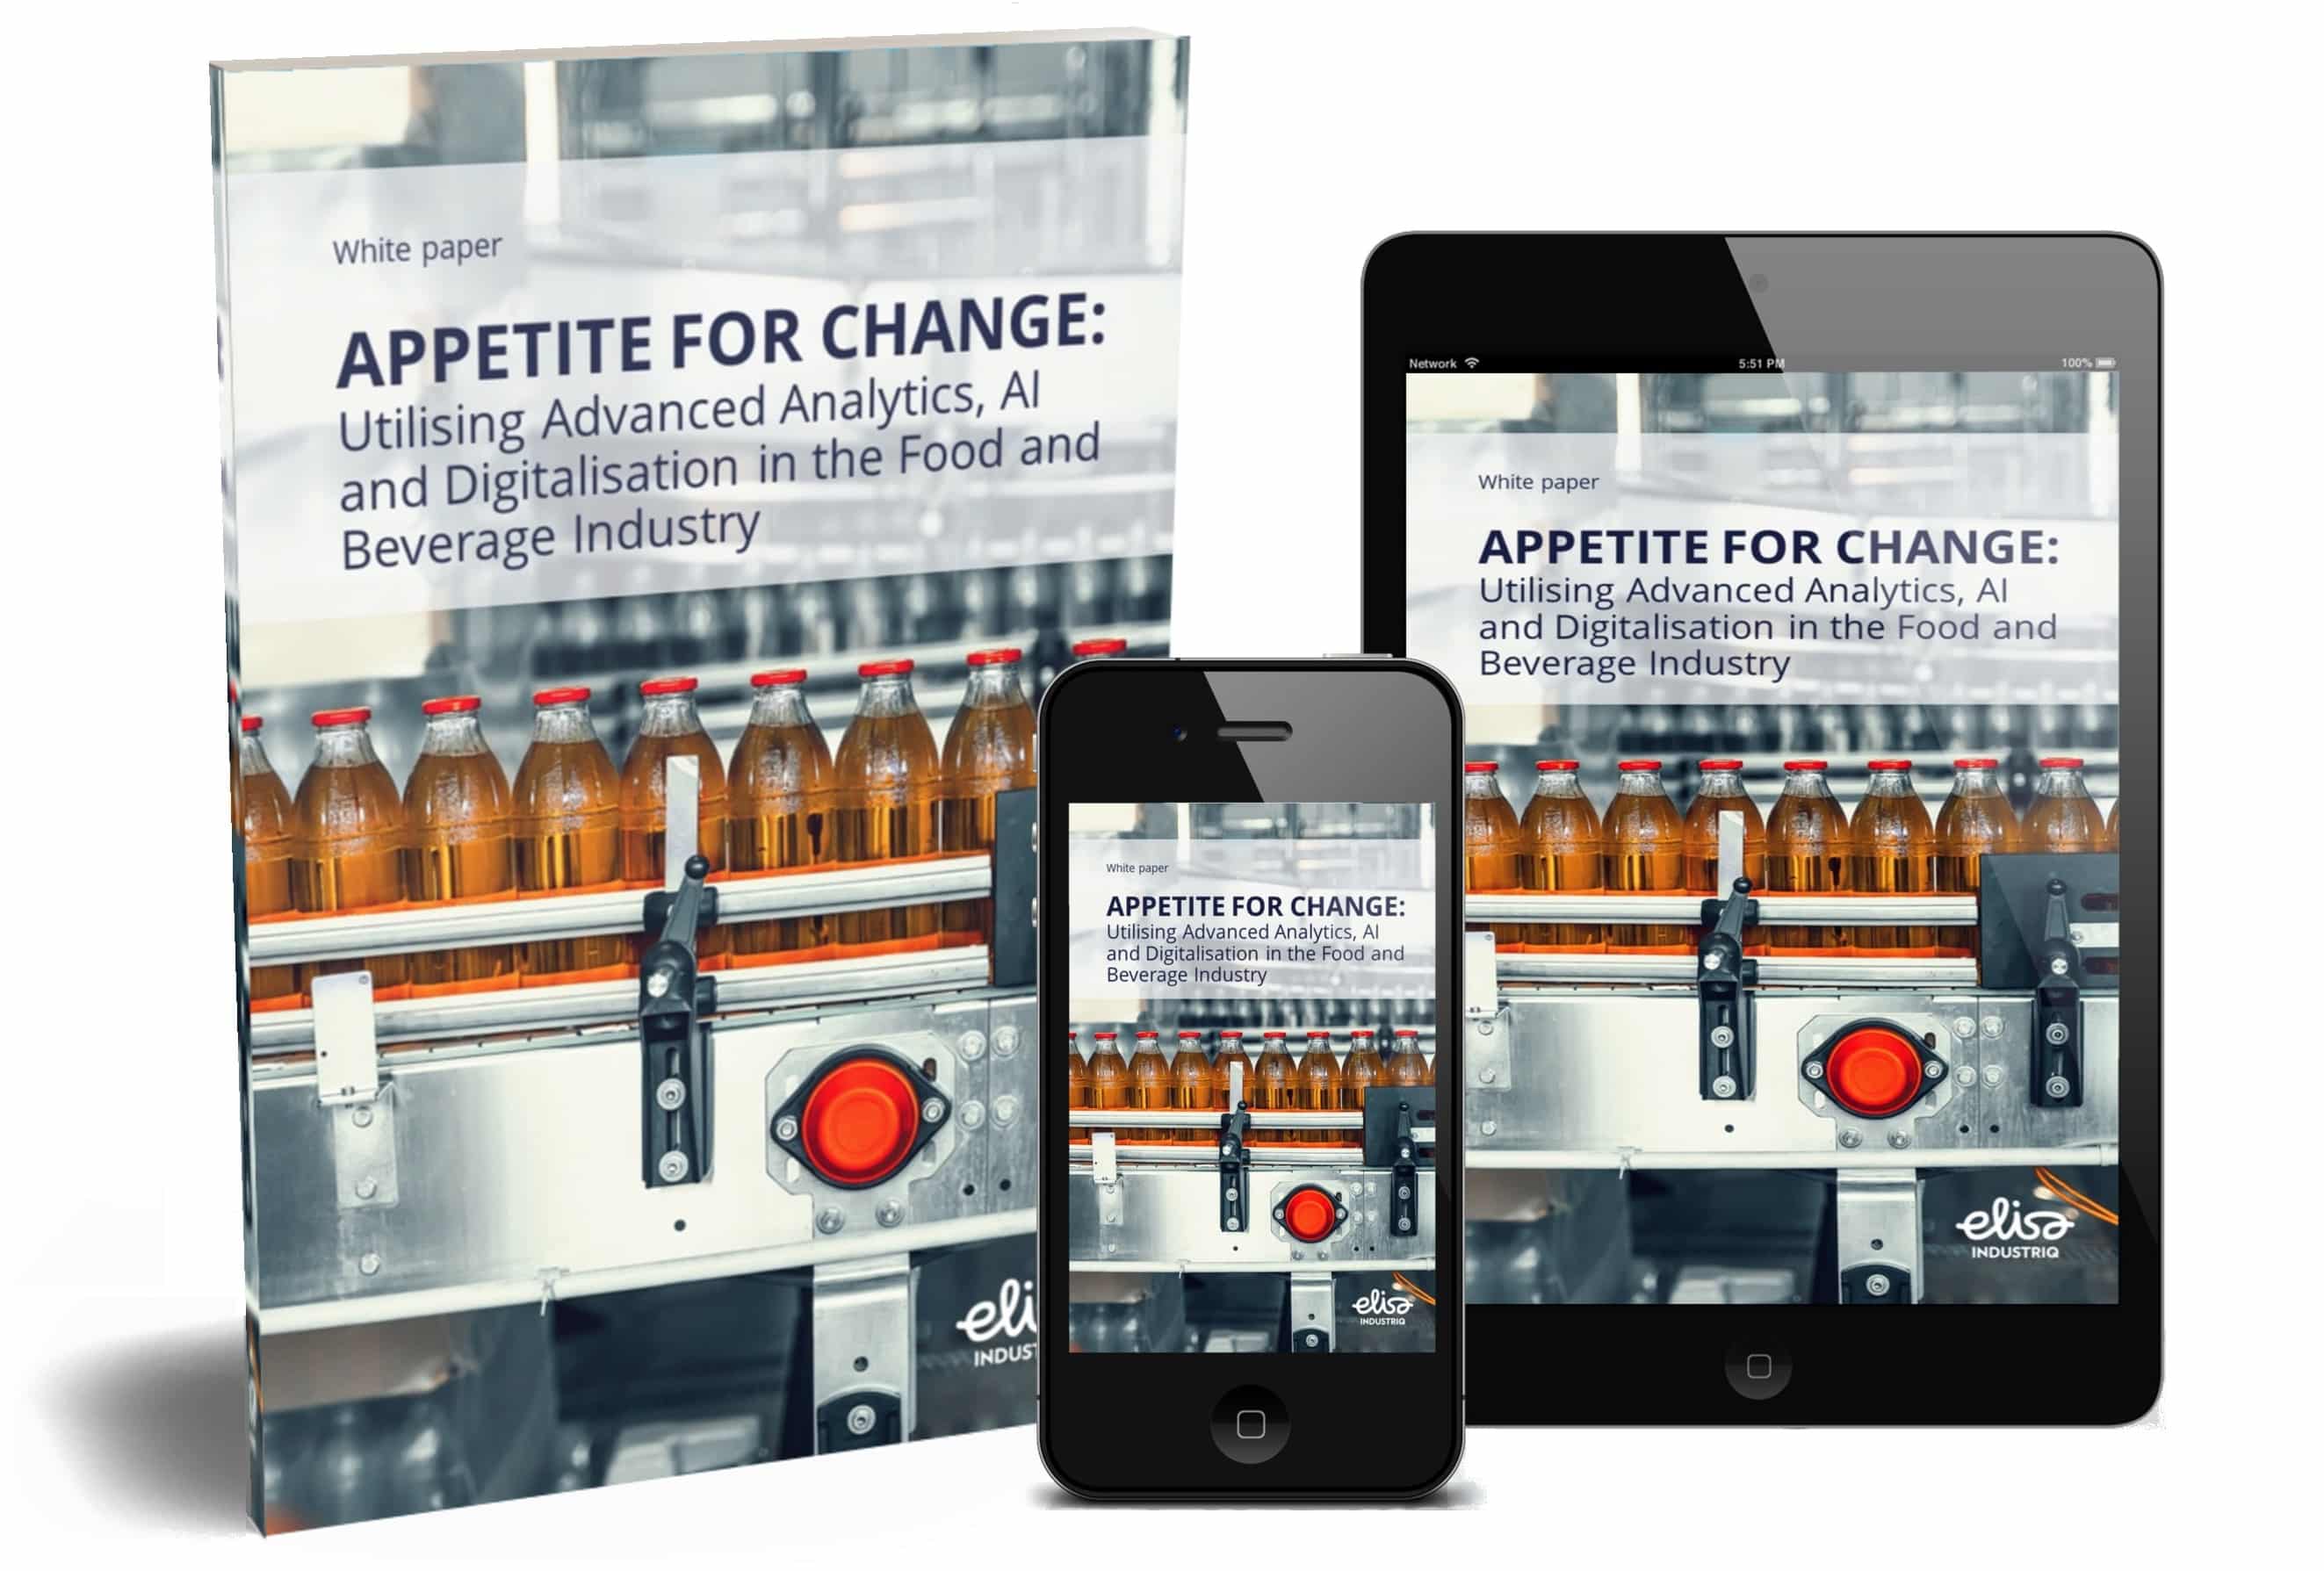 whitepaper digitalization food beverage industry